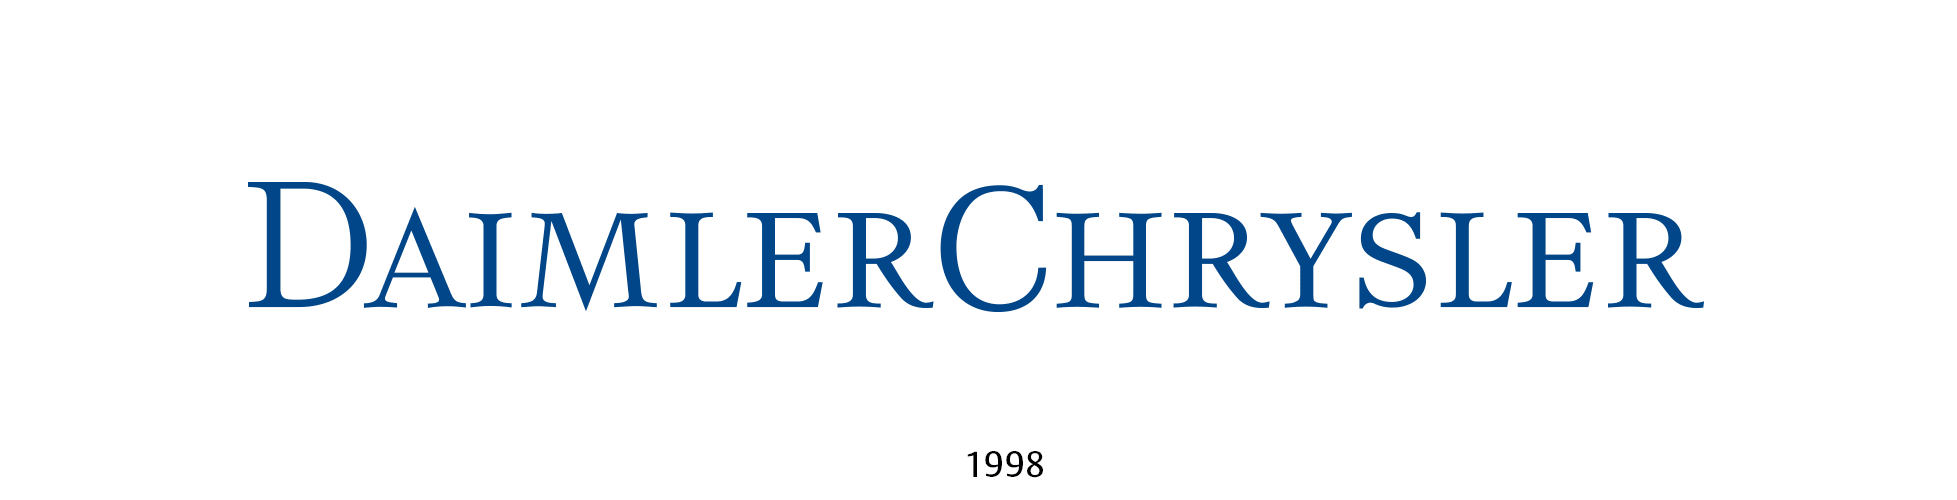 Daimler Corporate Design Logo Evolution